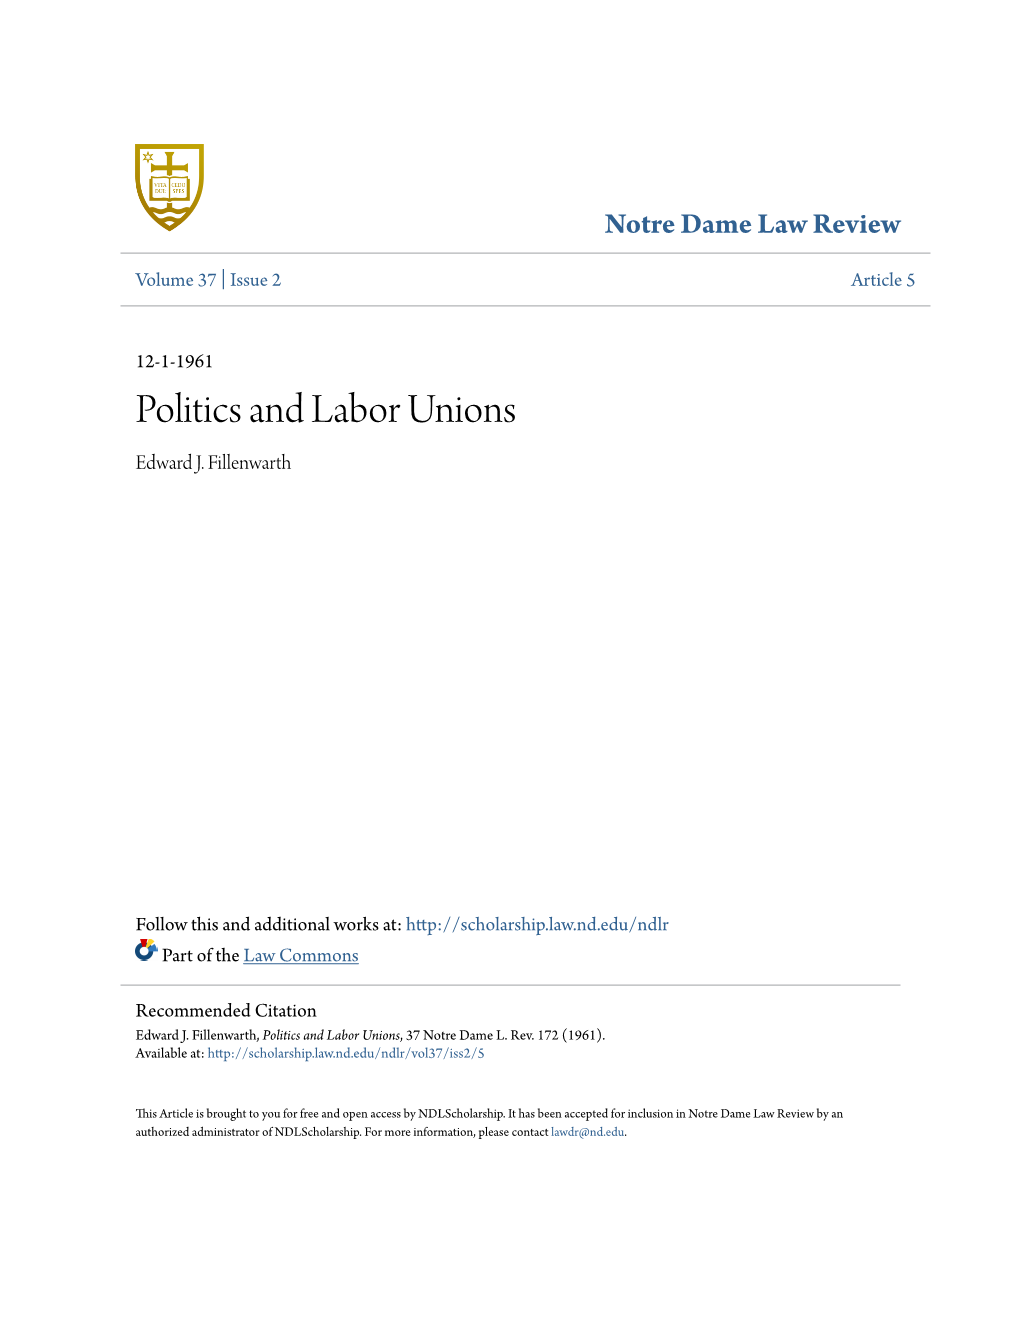 Politics and Labor Unions Edward J